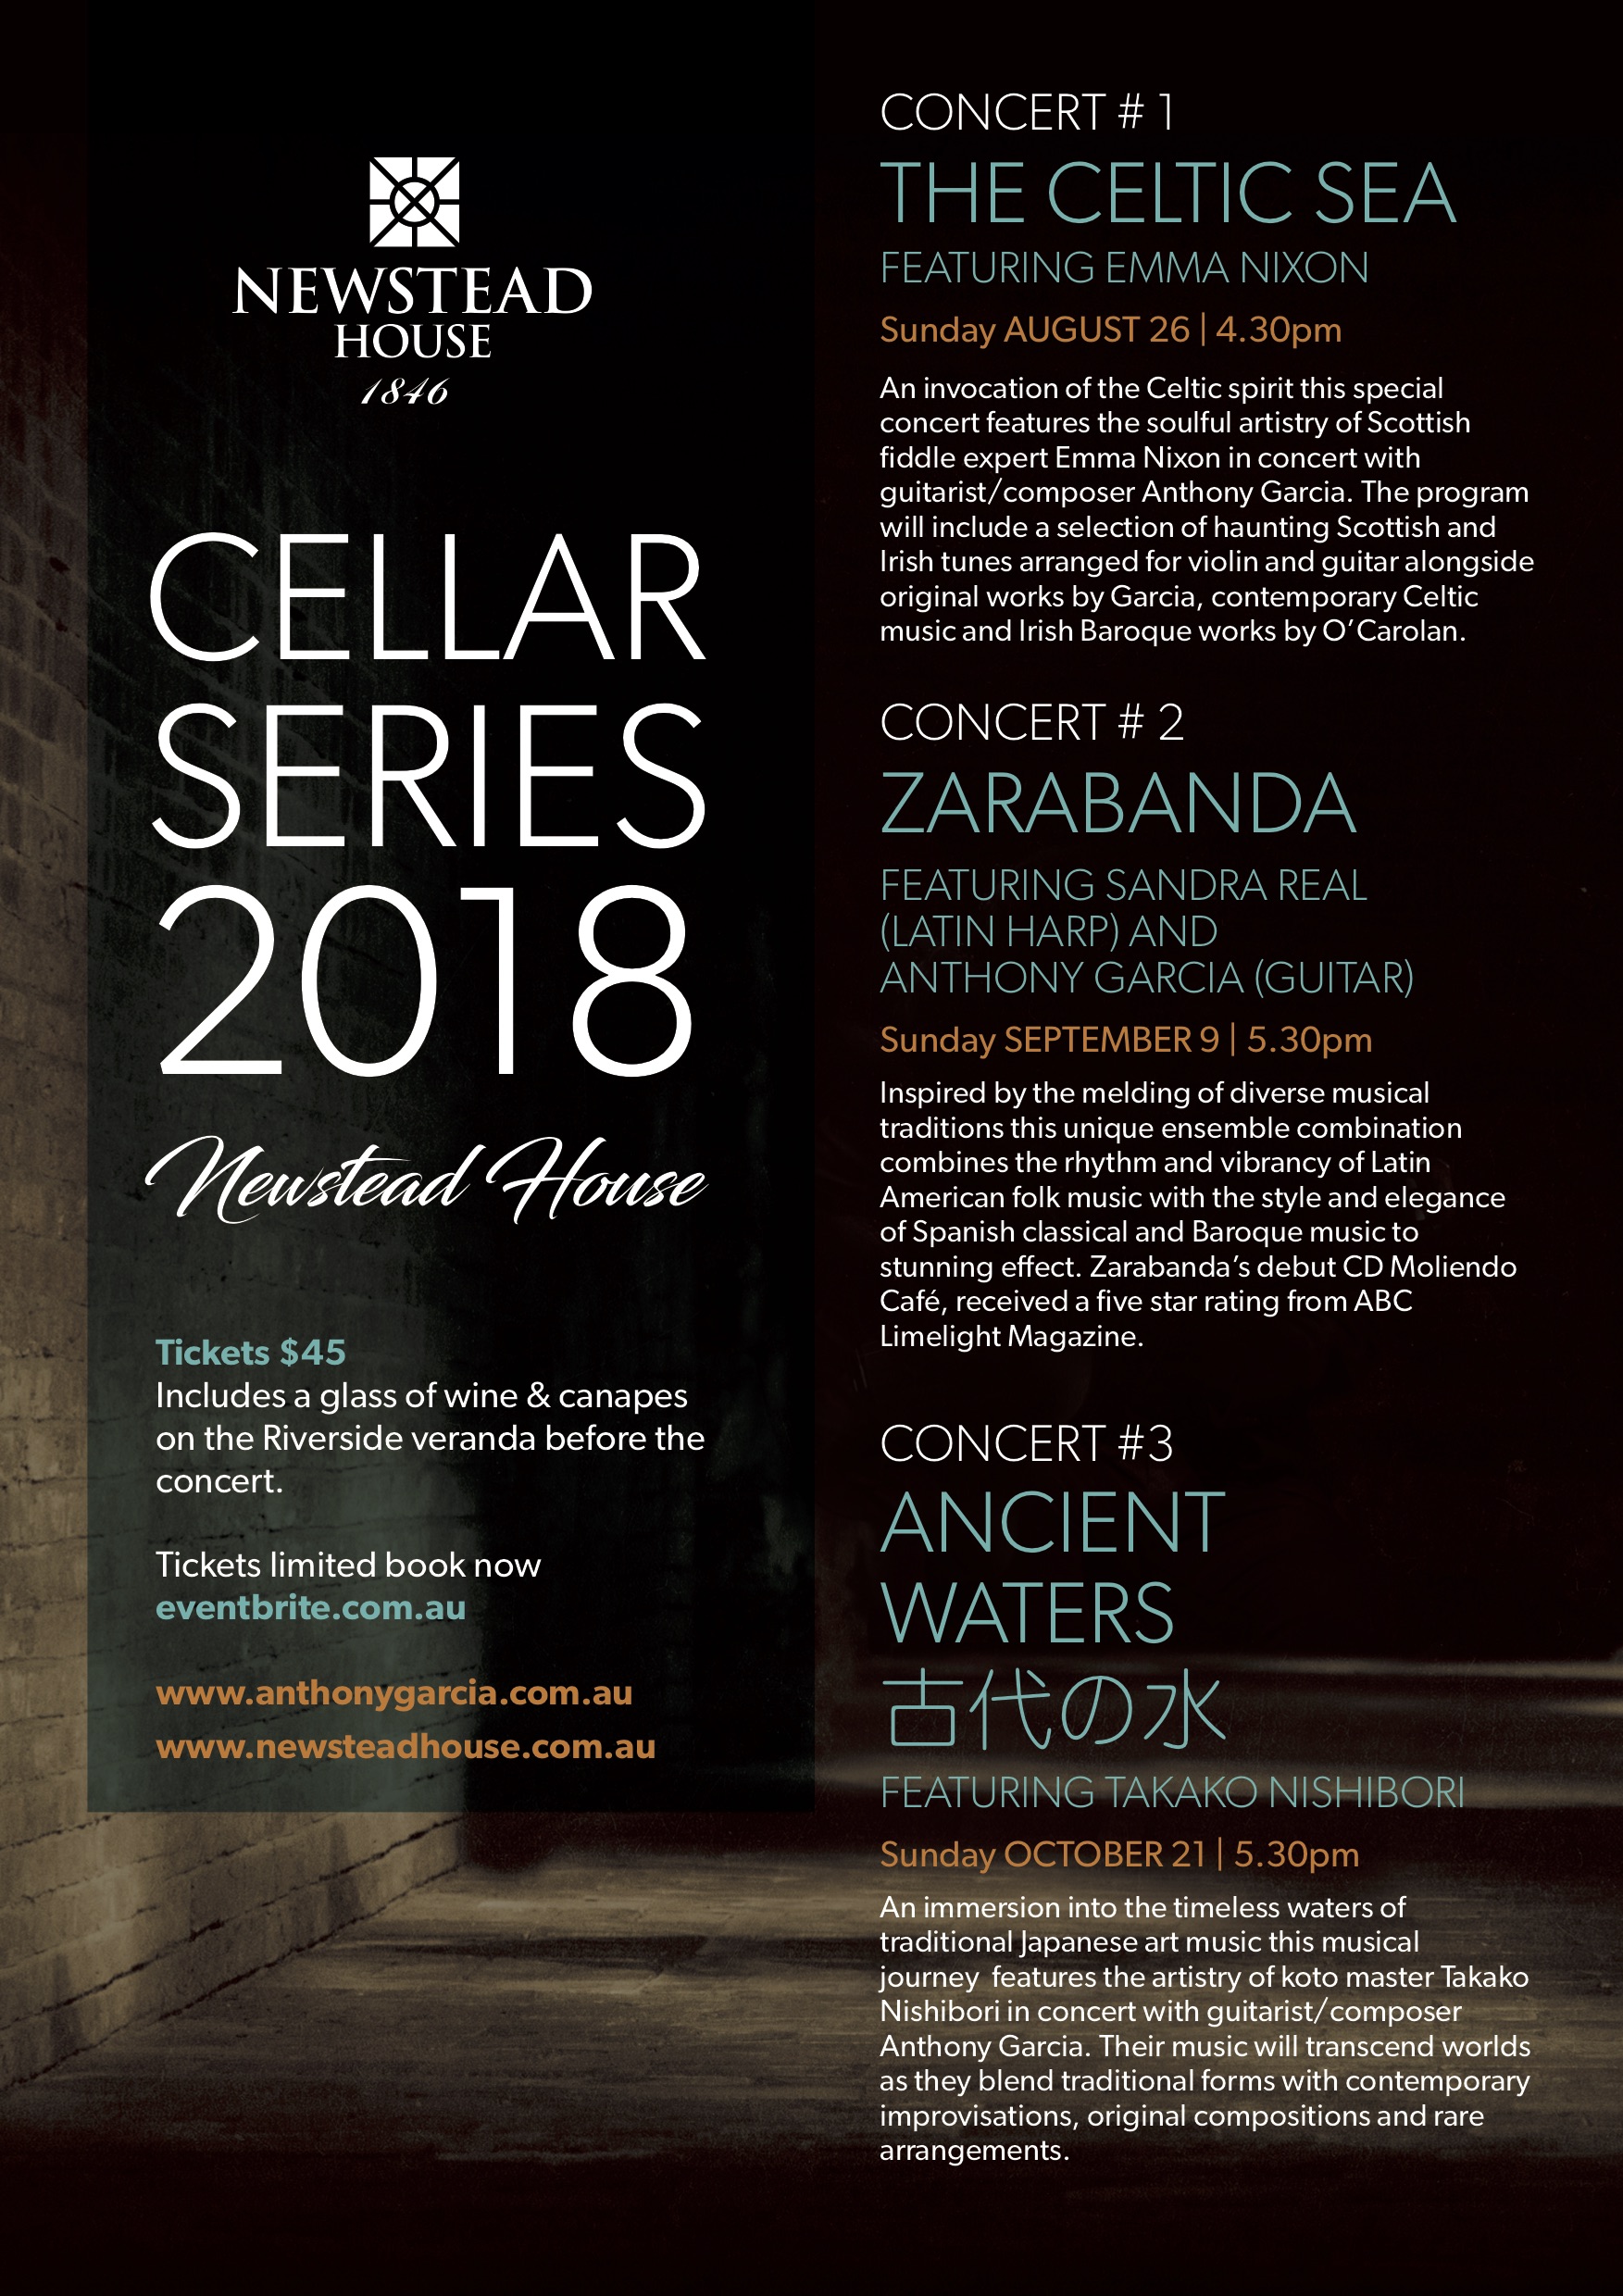 Cellar Series 2018 Concert #1 The Celtic Sea | Sounds Across Oceans